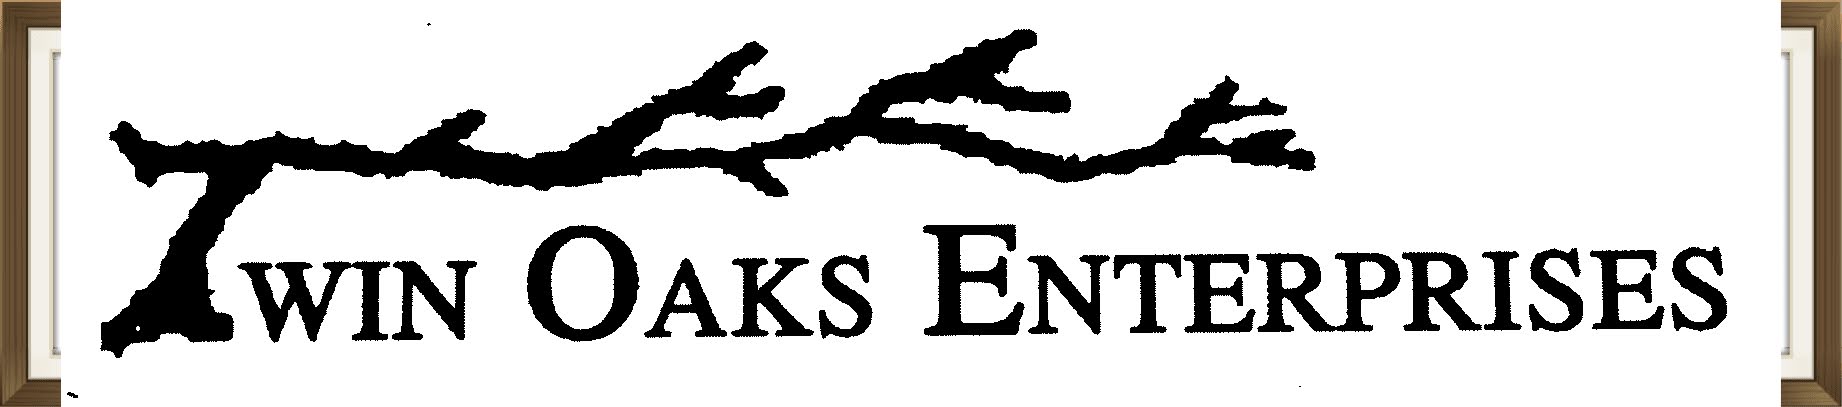 Twin Oaks Enterprises logo 